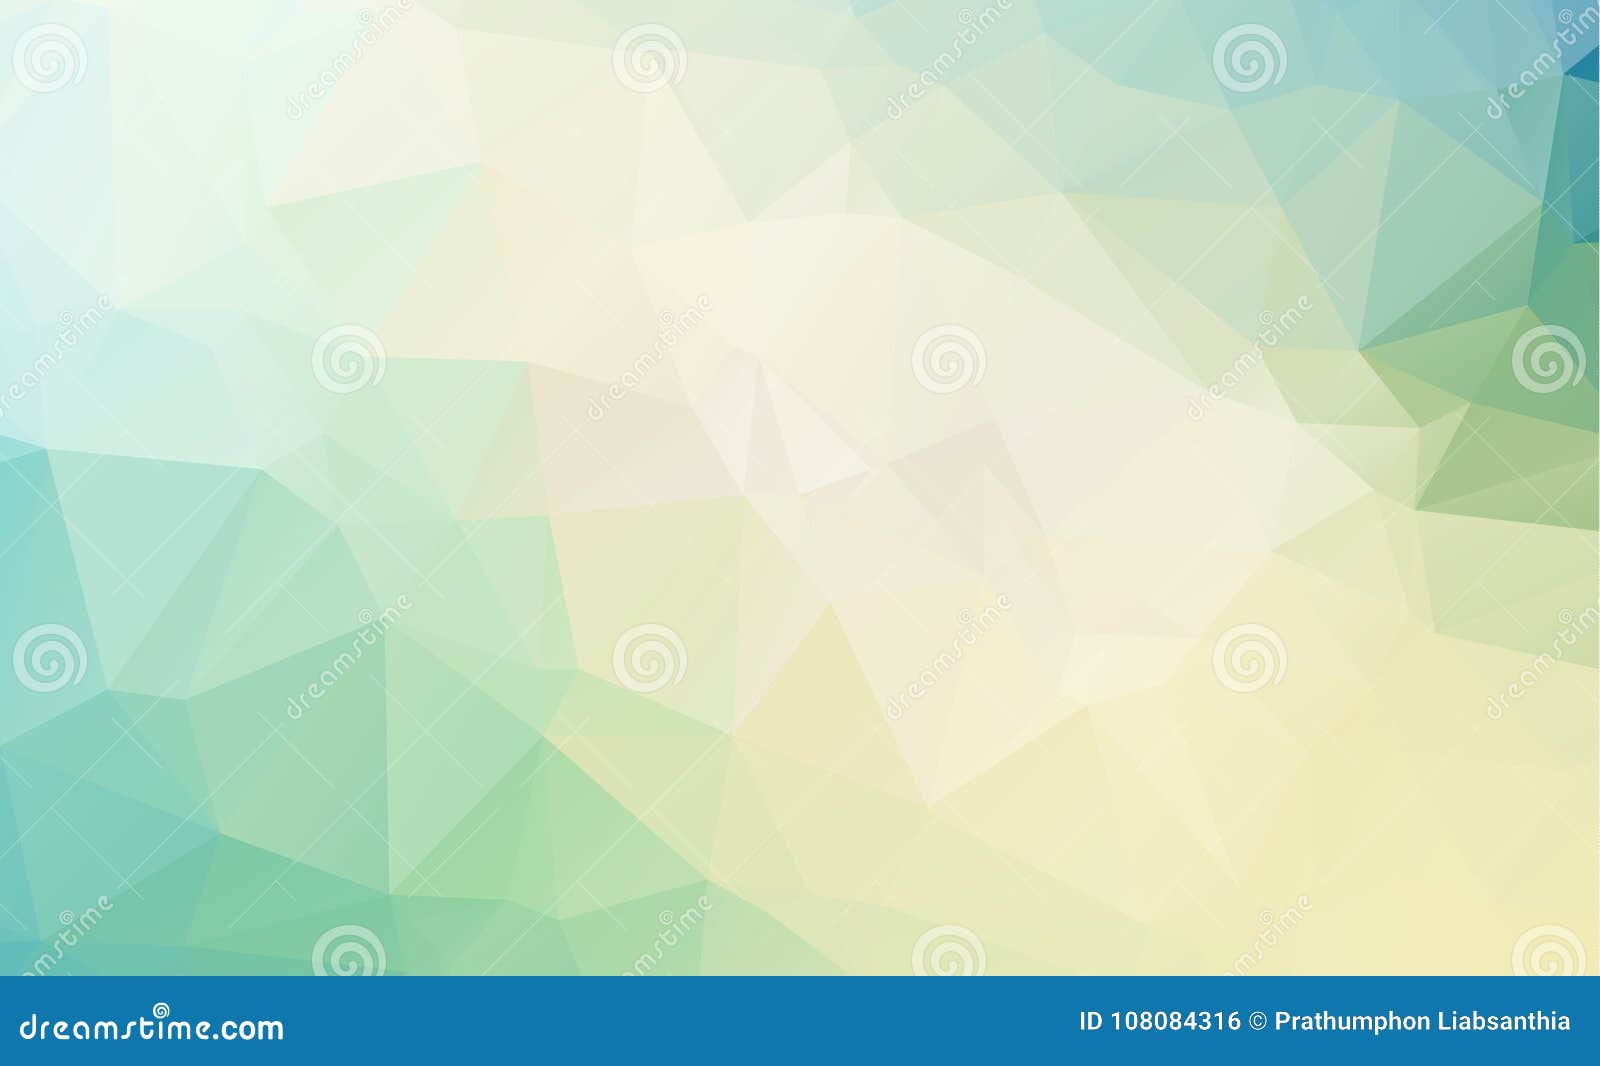 blue light polygonal low polygon triangle pattern background